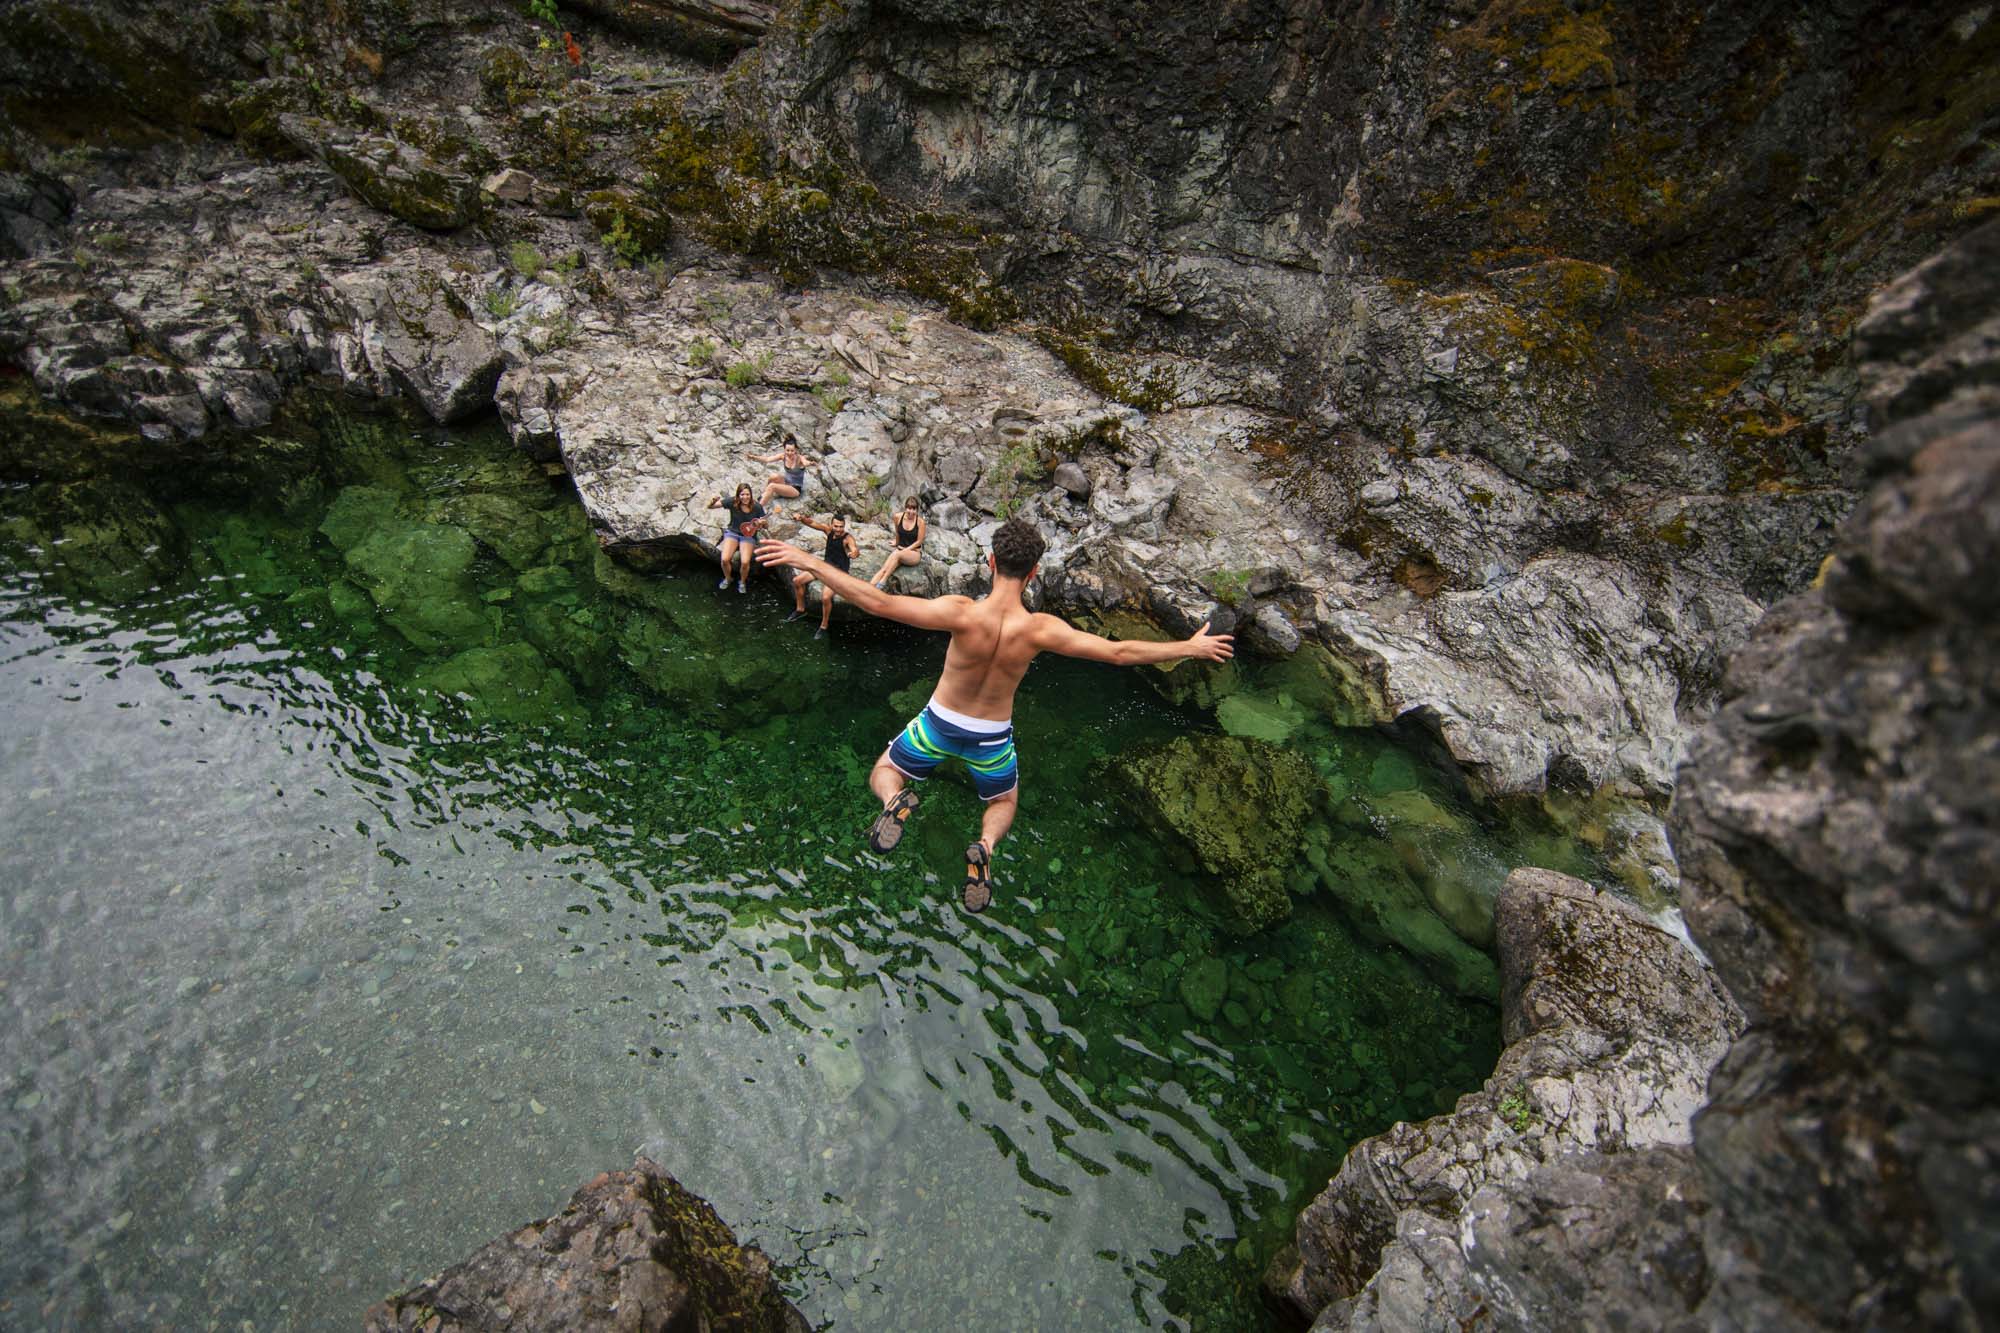 Man jumps into three pools